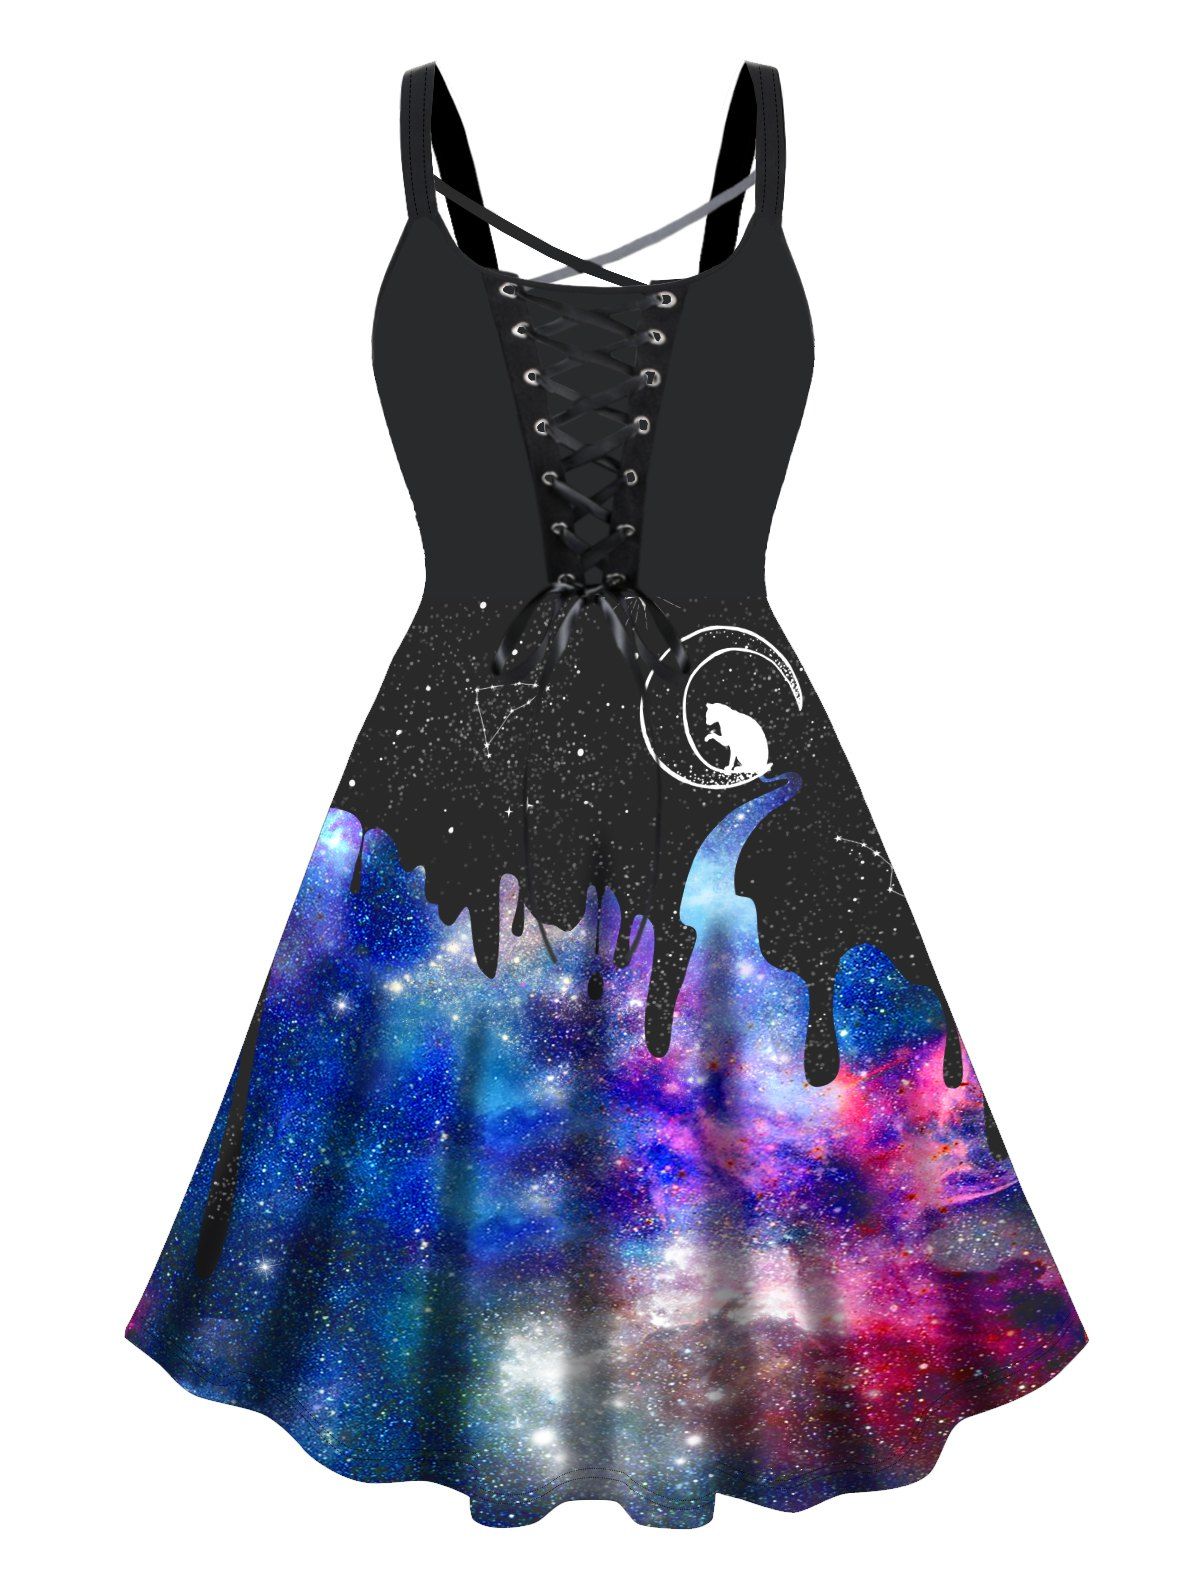 Plus Size Dress Galaxy Print Colorblock Lace Up High Waisted A Line Midi Dress - BLACK L